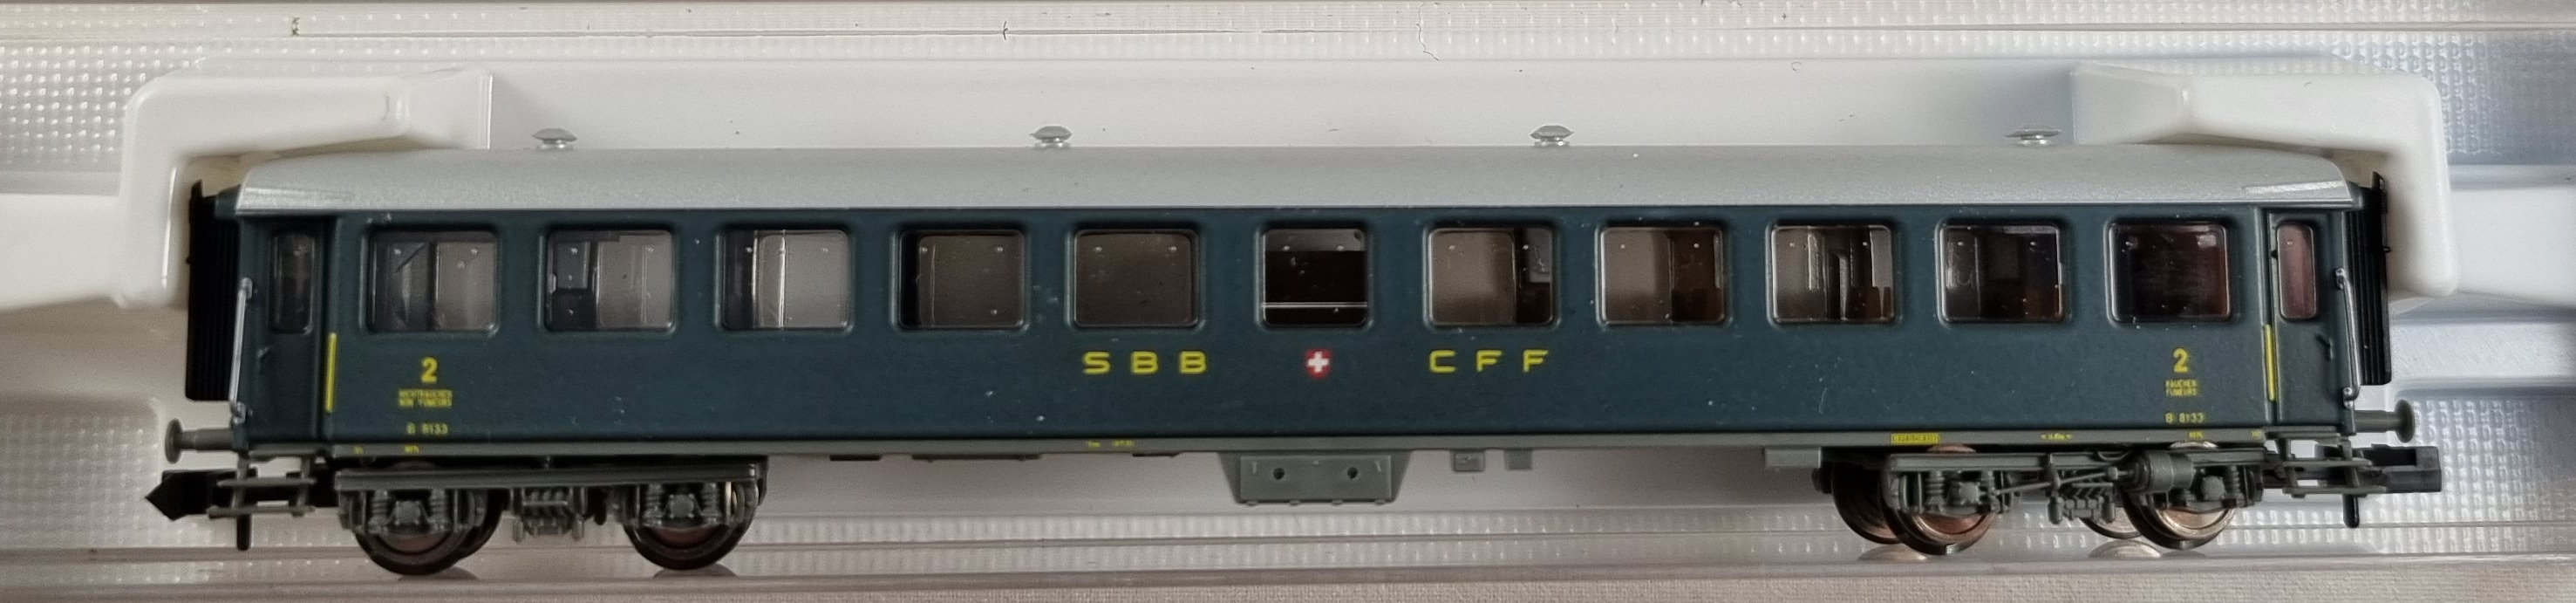 Fleischmann 813908, SBB personvagn, Skala N, SH 767-13, N6